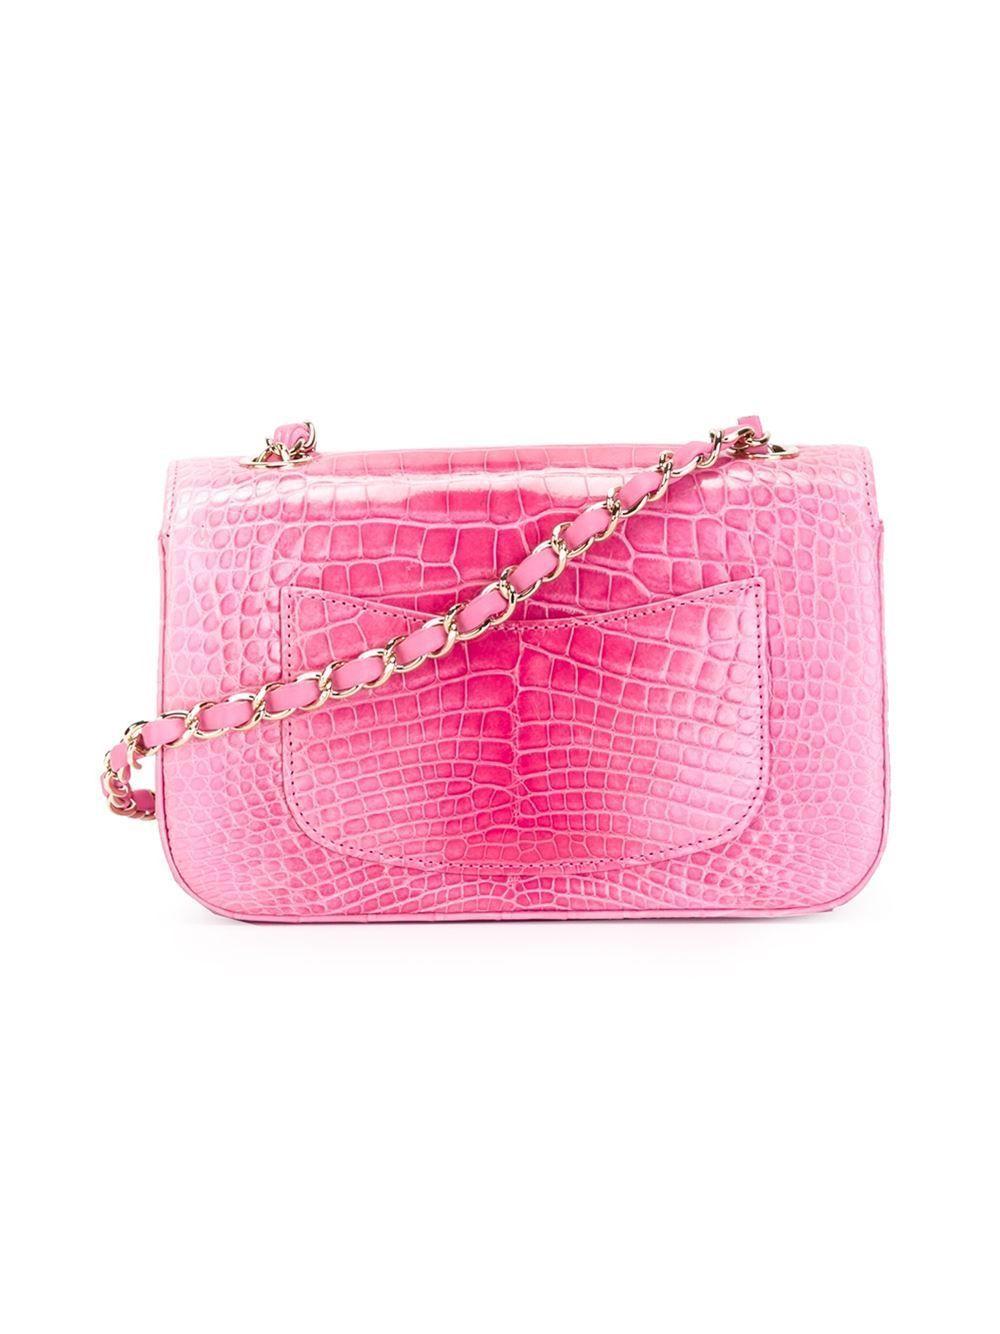 Crocodile with Pink Logo - Chanel Pink Crocodile Shoulder Bag